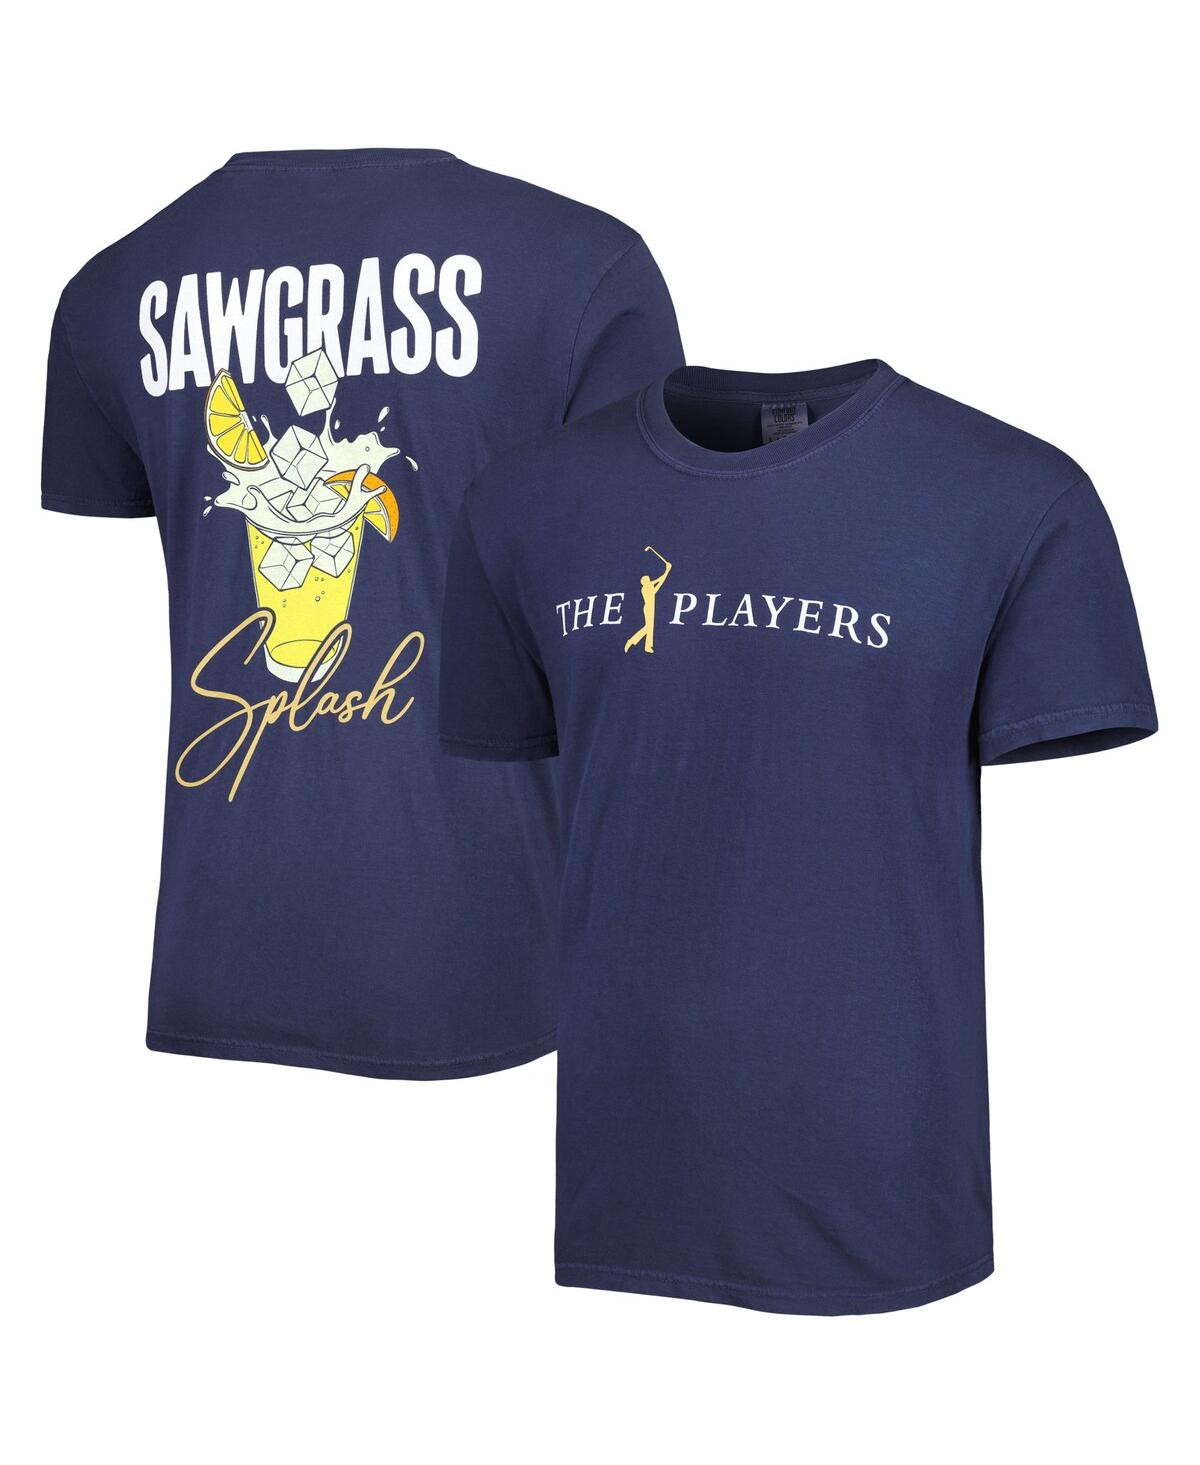 Men's Barstool Golf Navy The Players Sawgrass Splash T-shirt - Navy